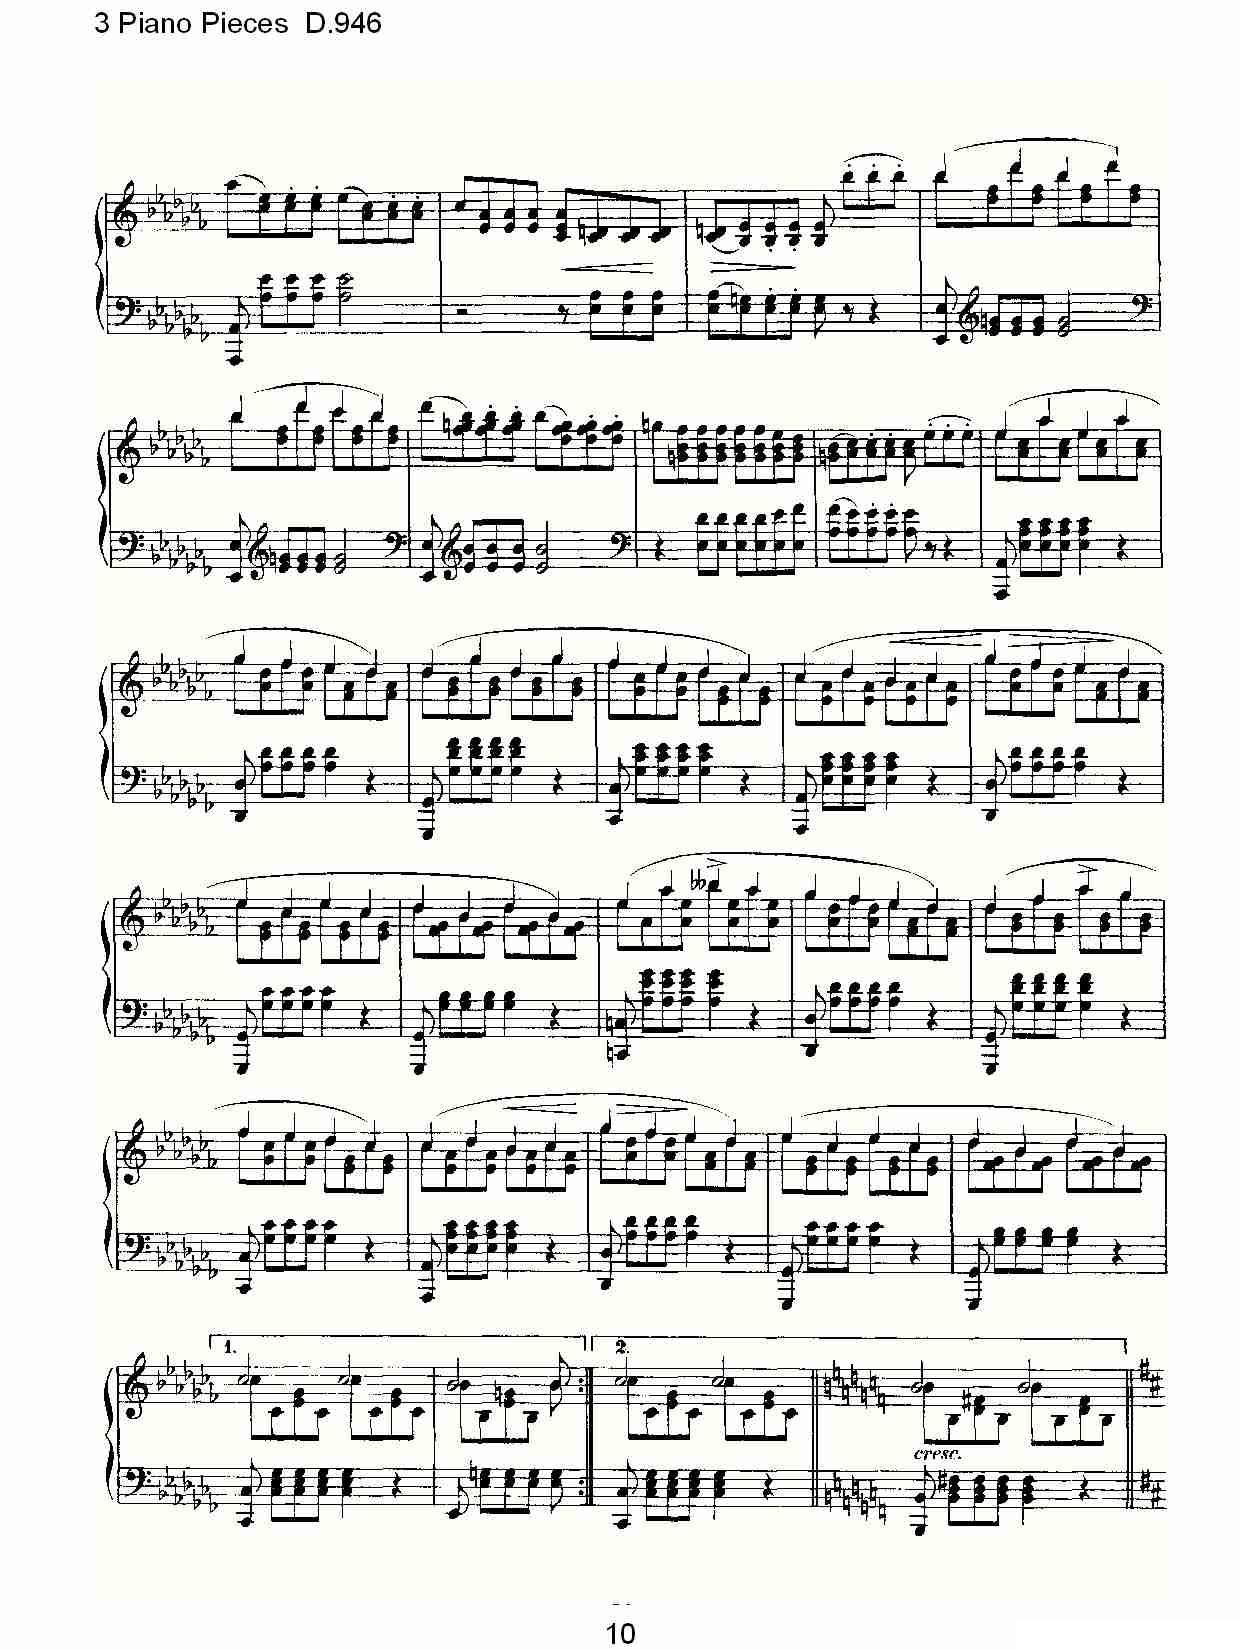 3 Piano Pieces D.946（钢琴三联奏D.946）钢琴曲谱（图10）